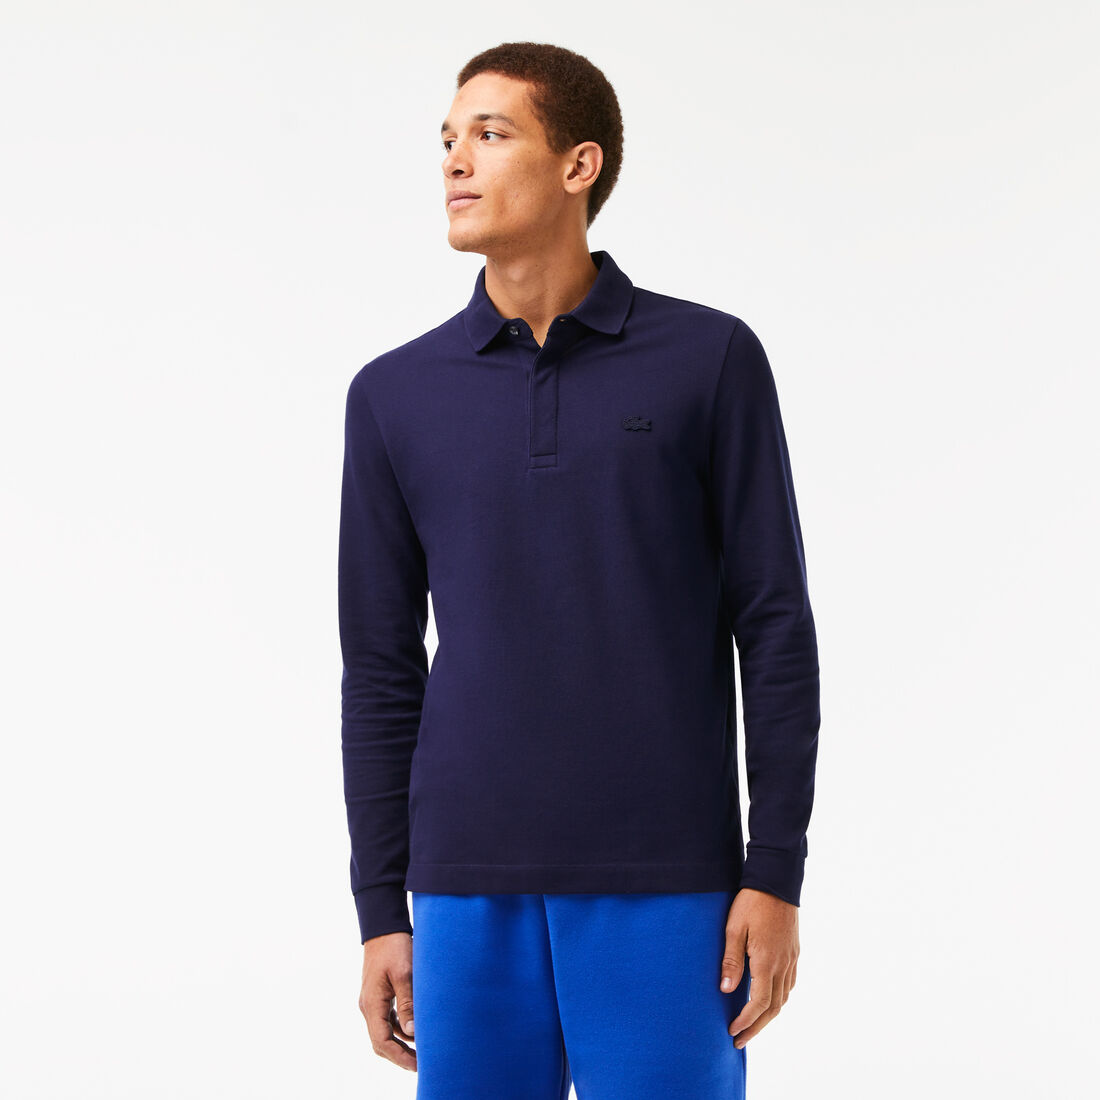 Lacoste Long-sleeve Paris Klassische Fit Stretch Polo Shirts Herren Navy Blau | BMHU-57849